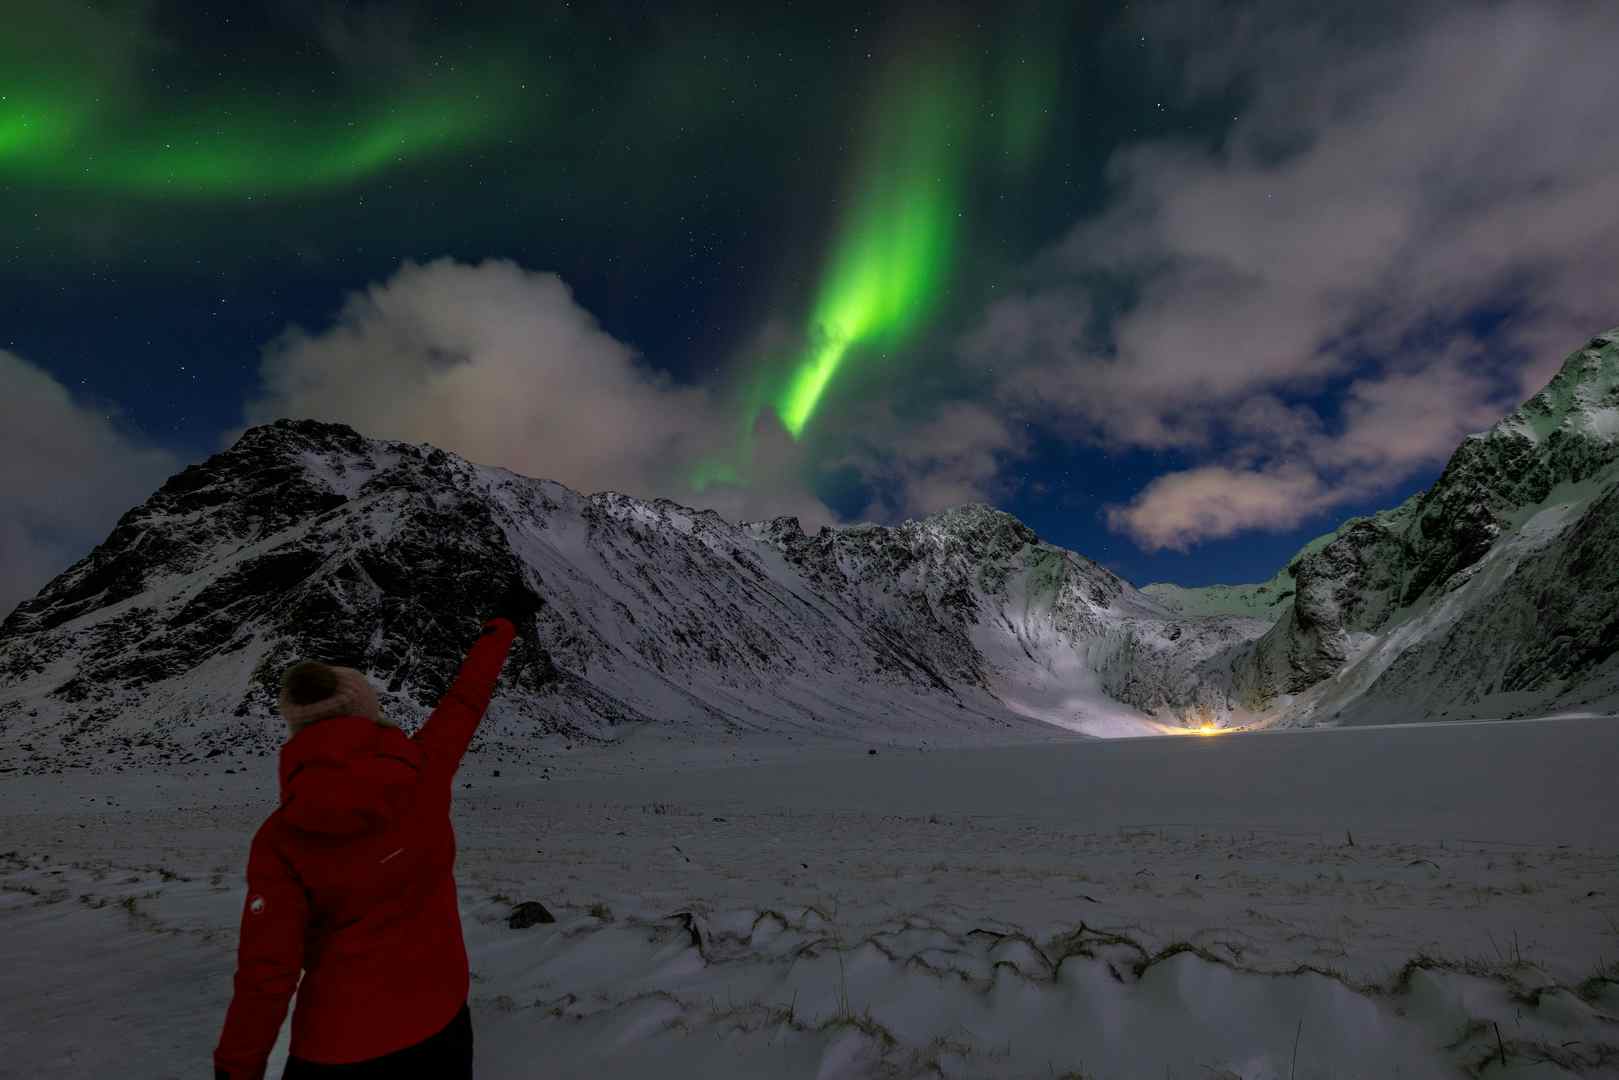 Epic Norway Lights!